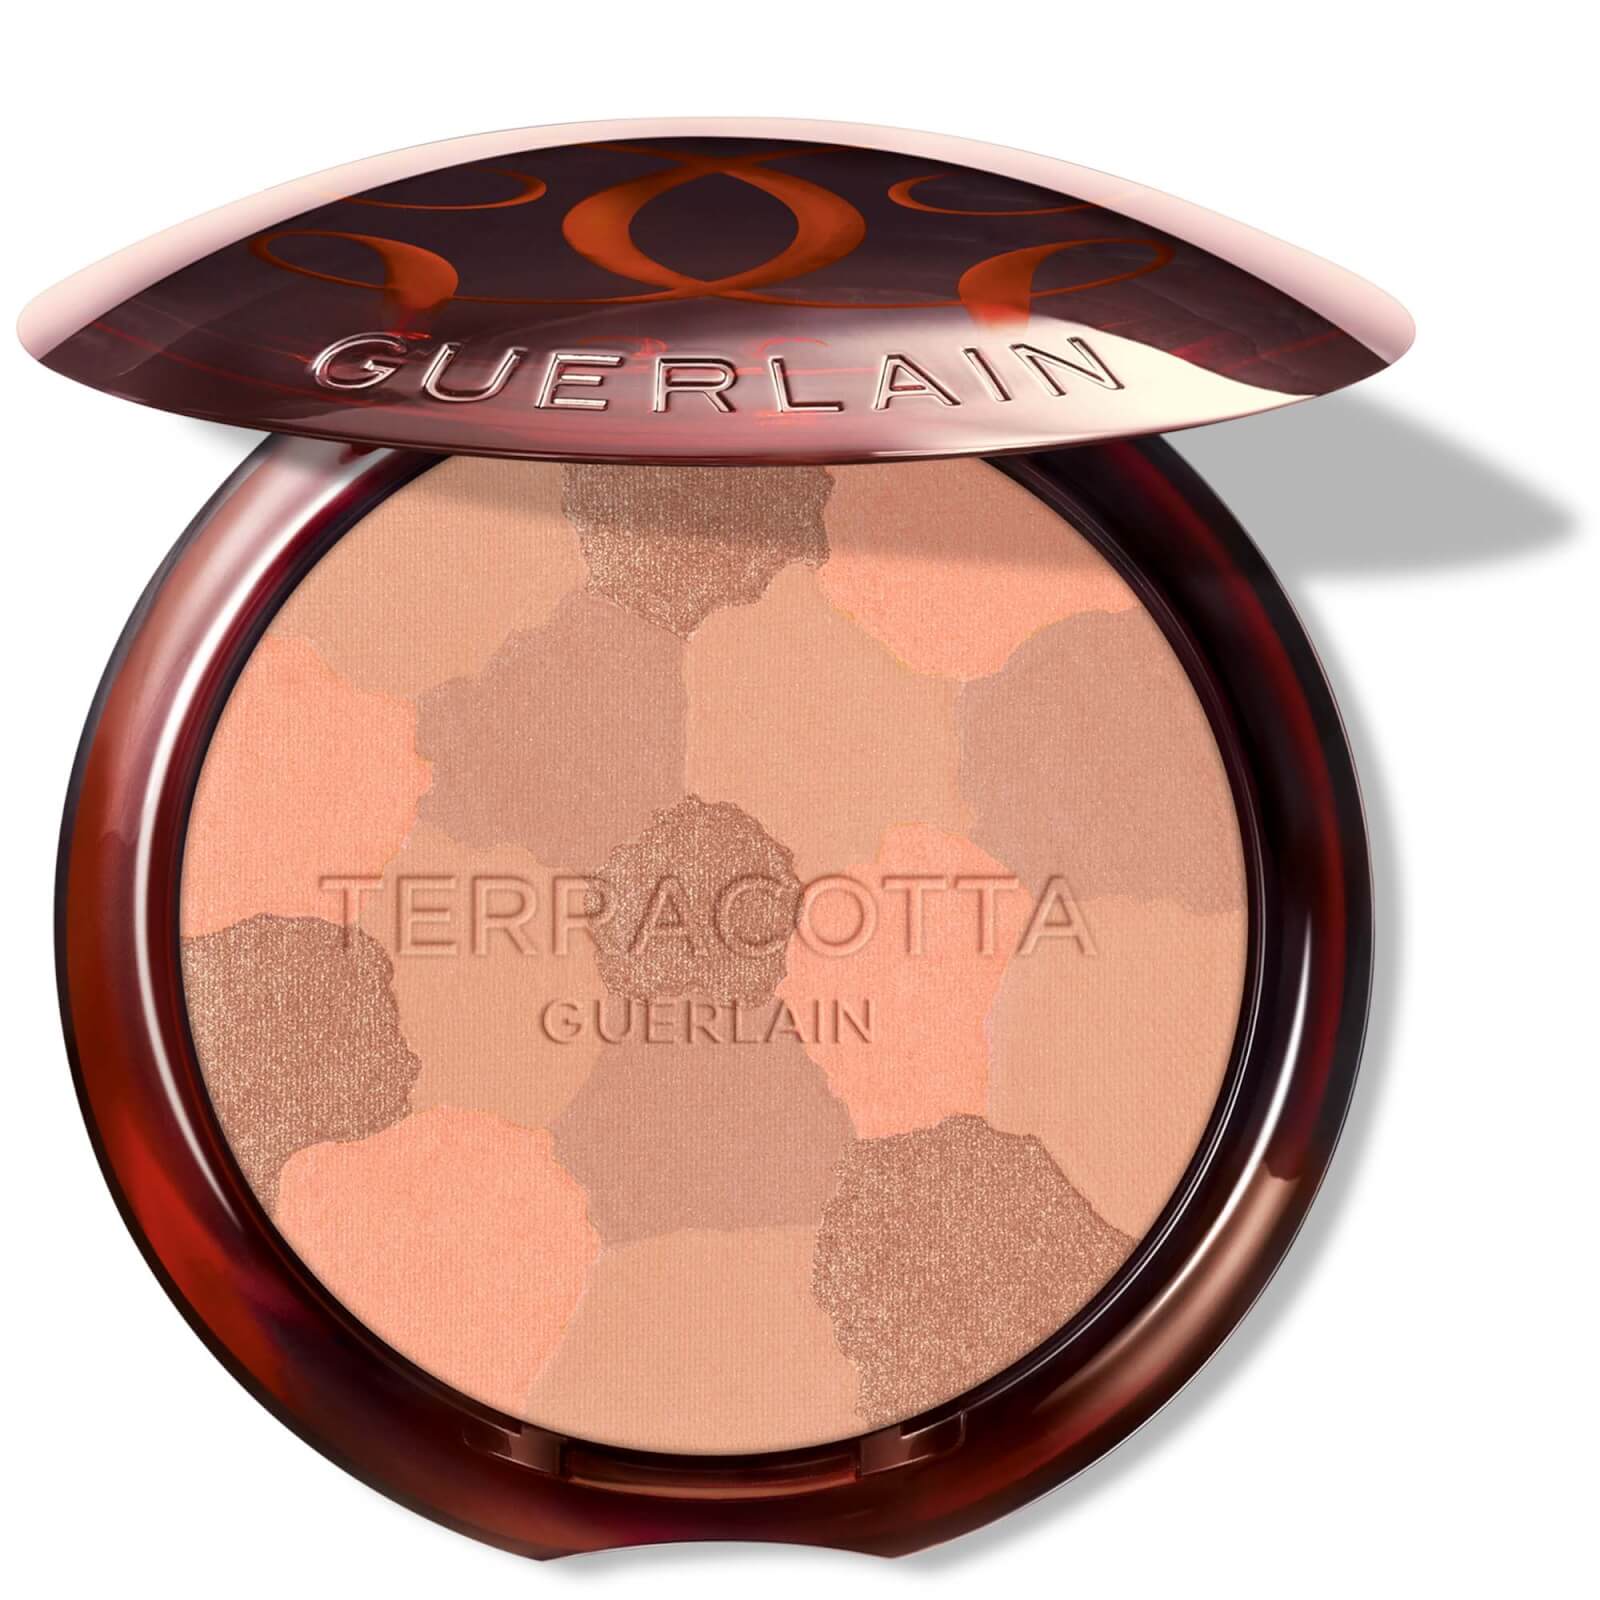 Photos - Face Powder / Blush Guerlain Terracotta Light The Sun-Kissed Natural Healthy Glow Powder 10g ( 